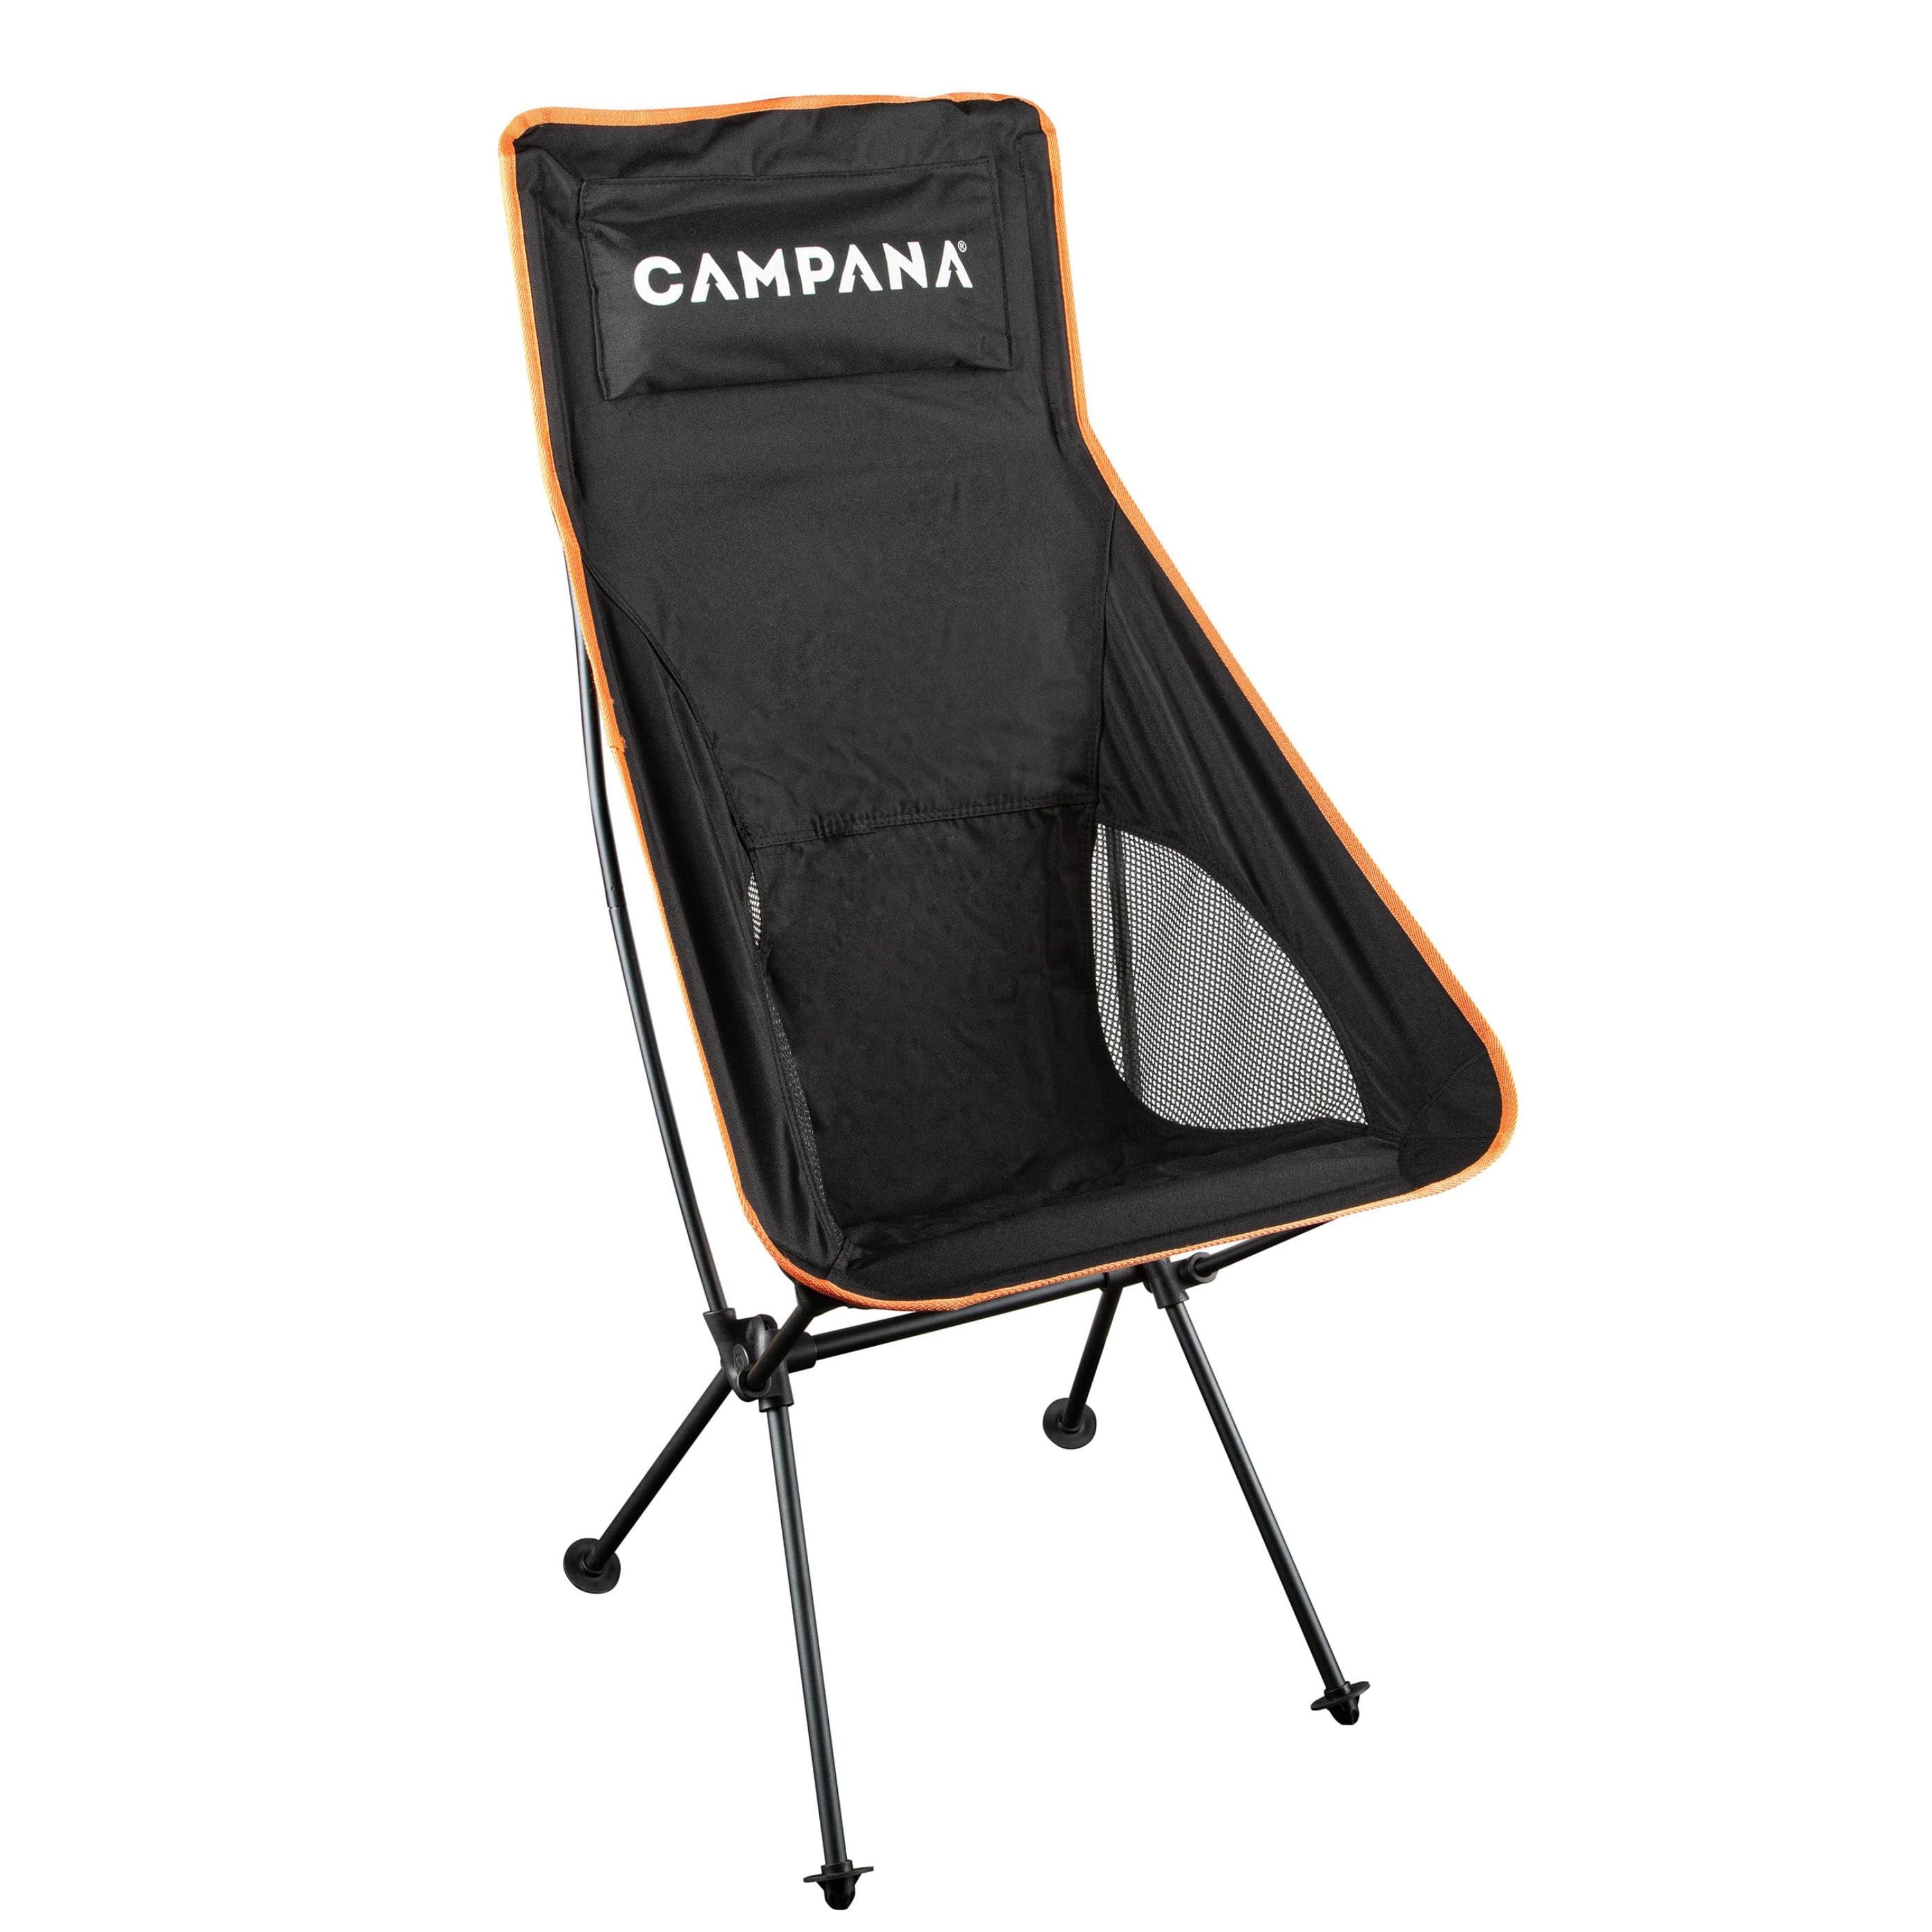 High back foldable aluminum chair